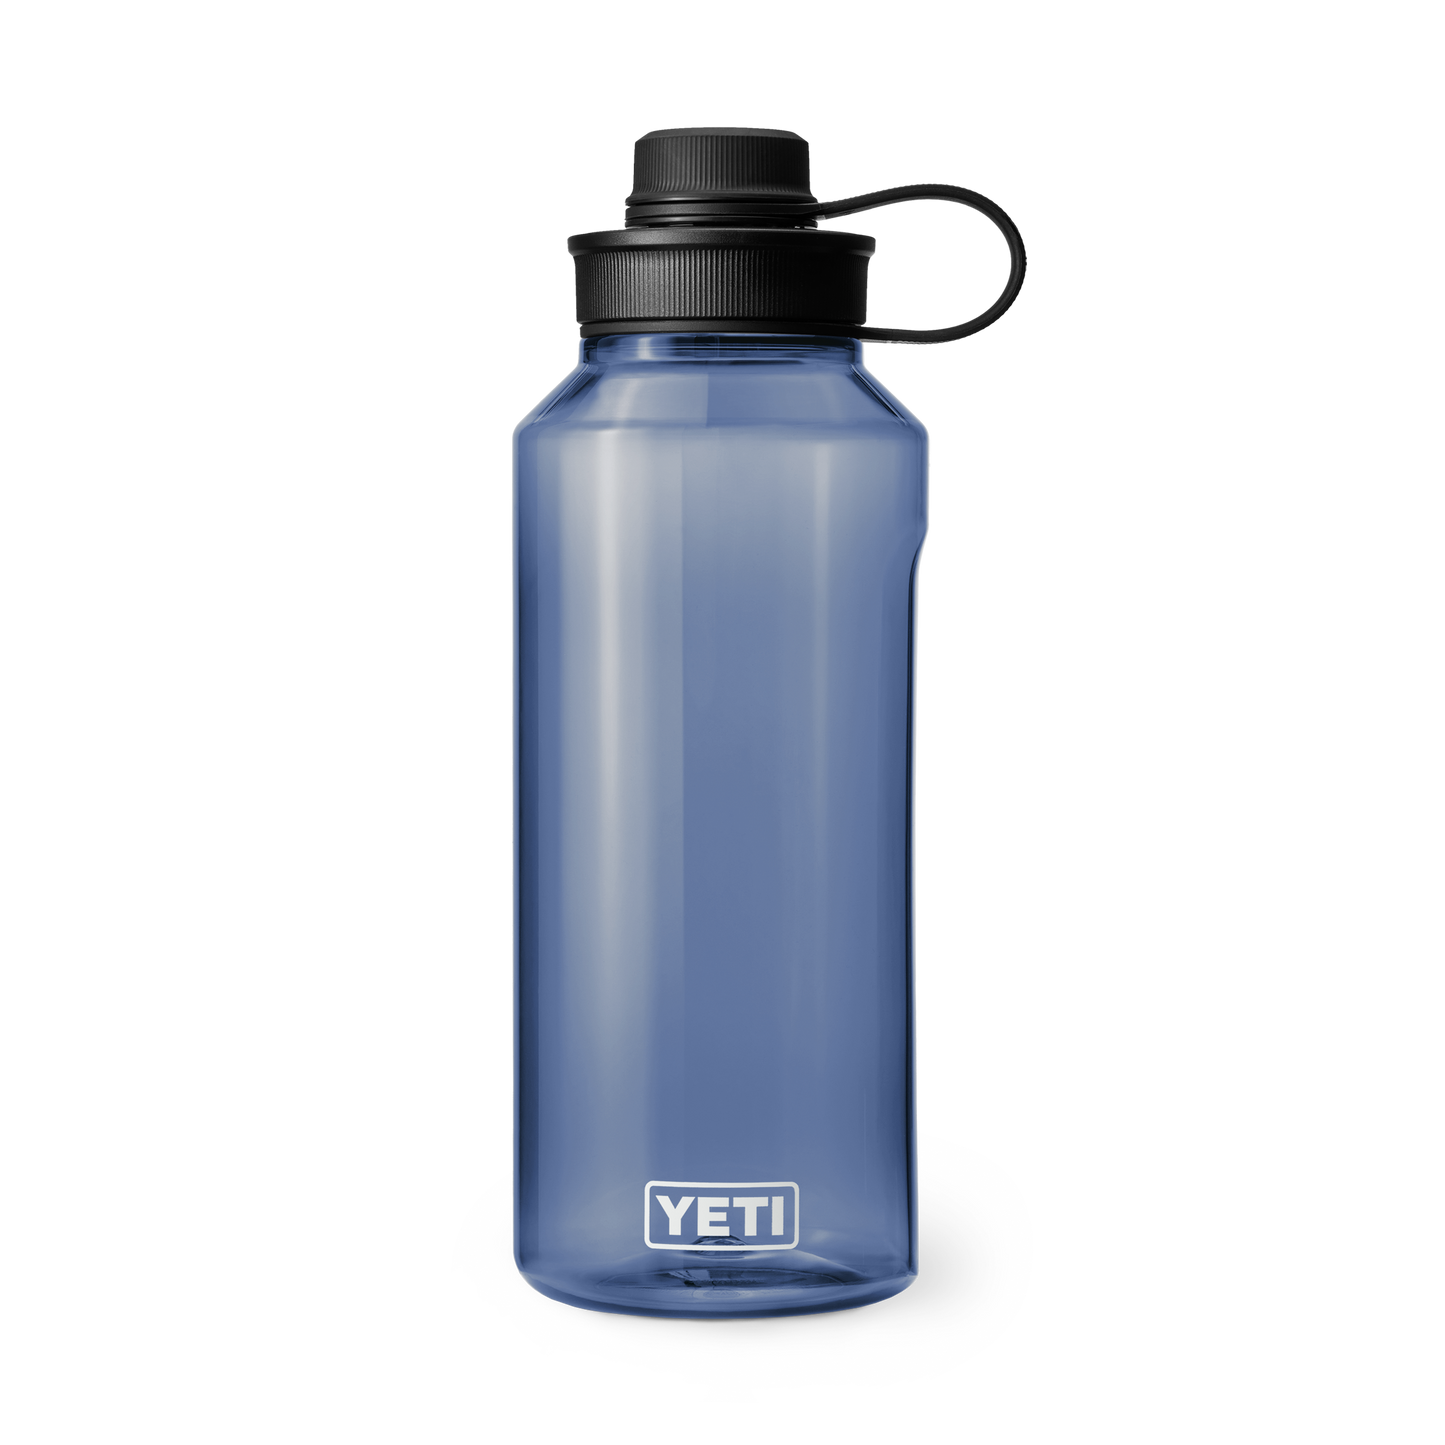 Yonder™ 1.5 L Water Bottle Navy